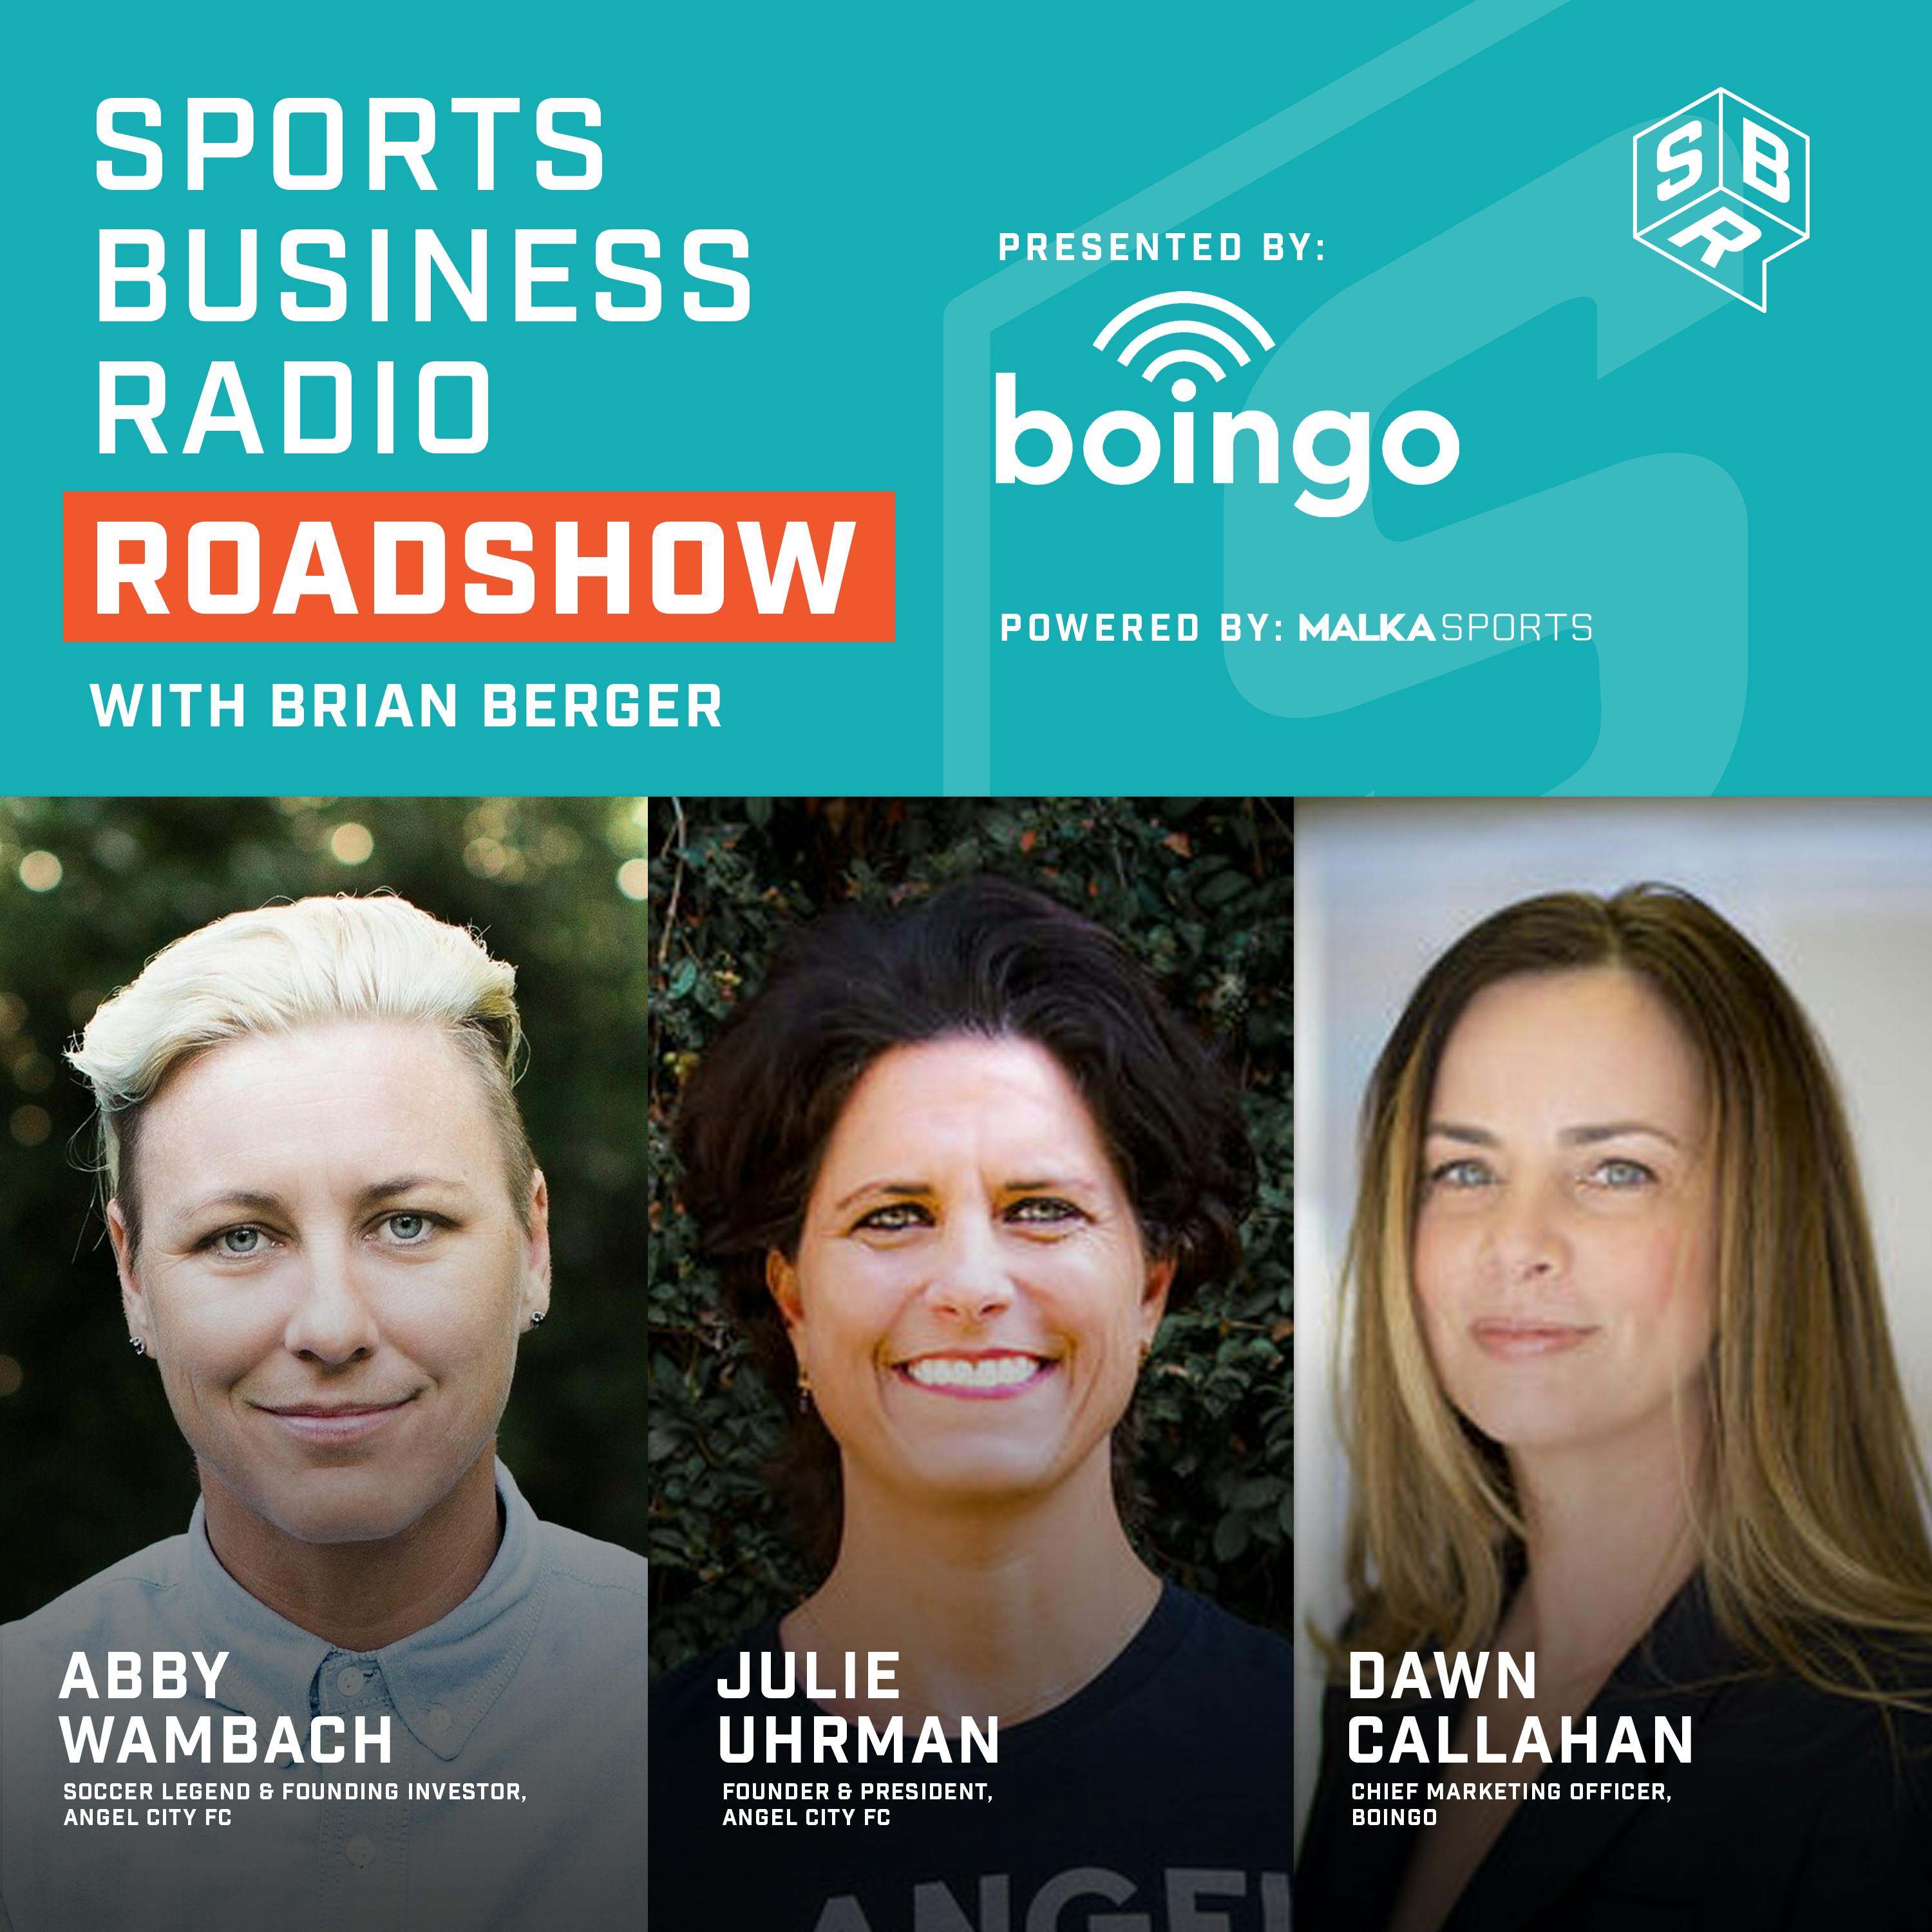 Sports Business Radio Road Show presented by Boingo - Abby Wambach, Julie Uhrman & Dawn Callahan